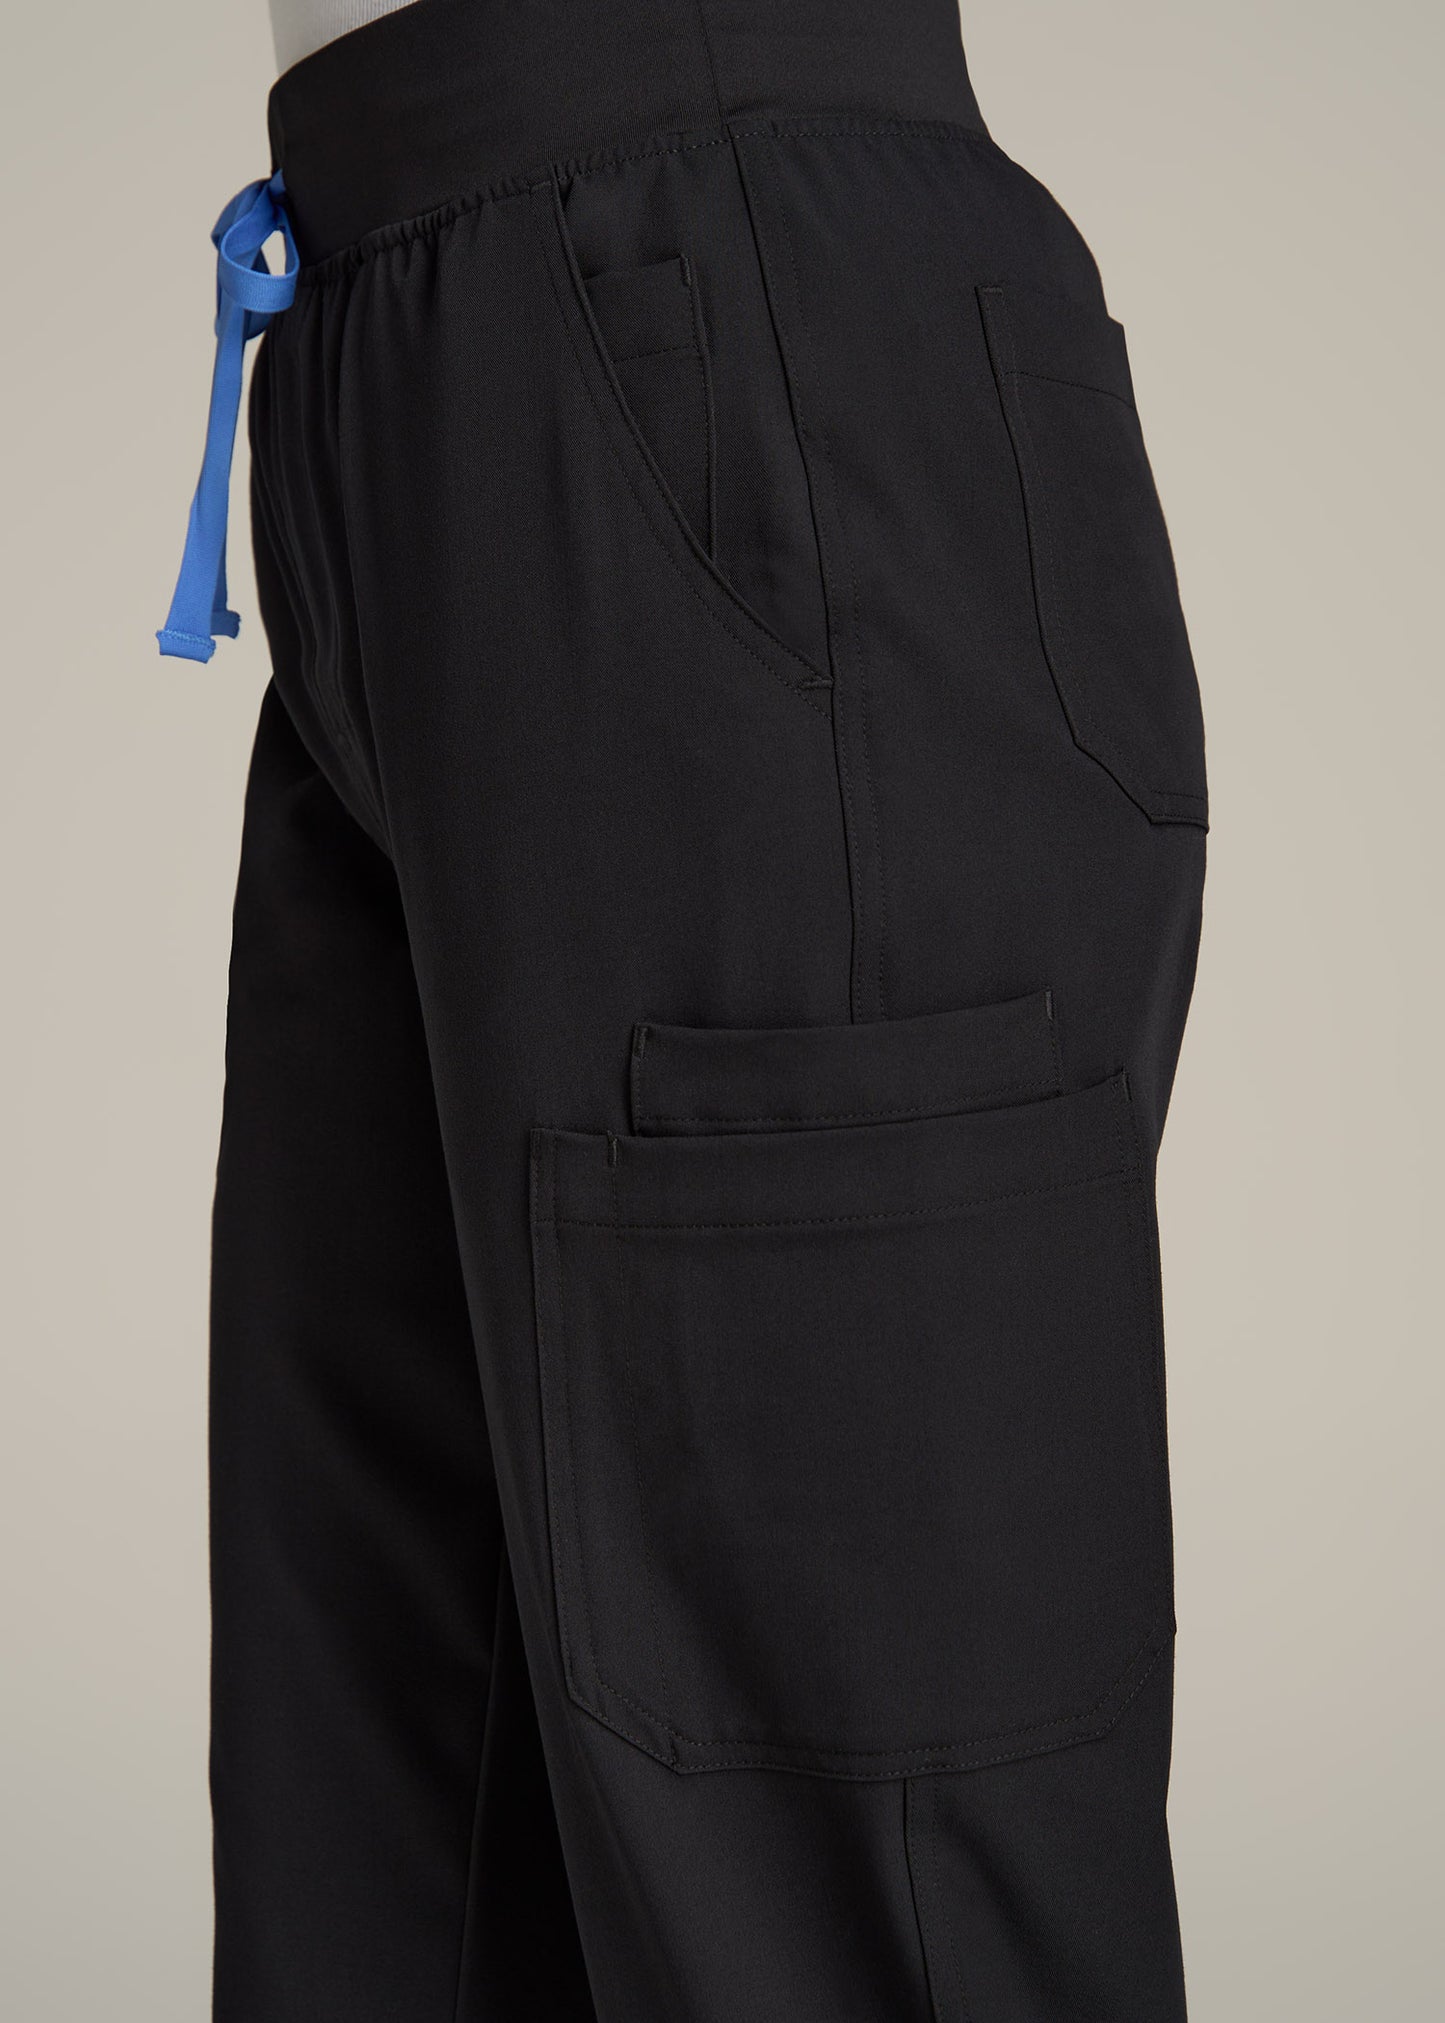 Cargo Scrub Pants for Tall Women in Black